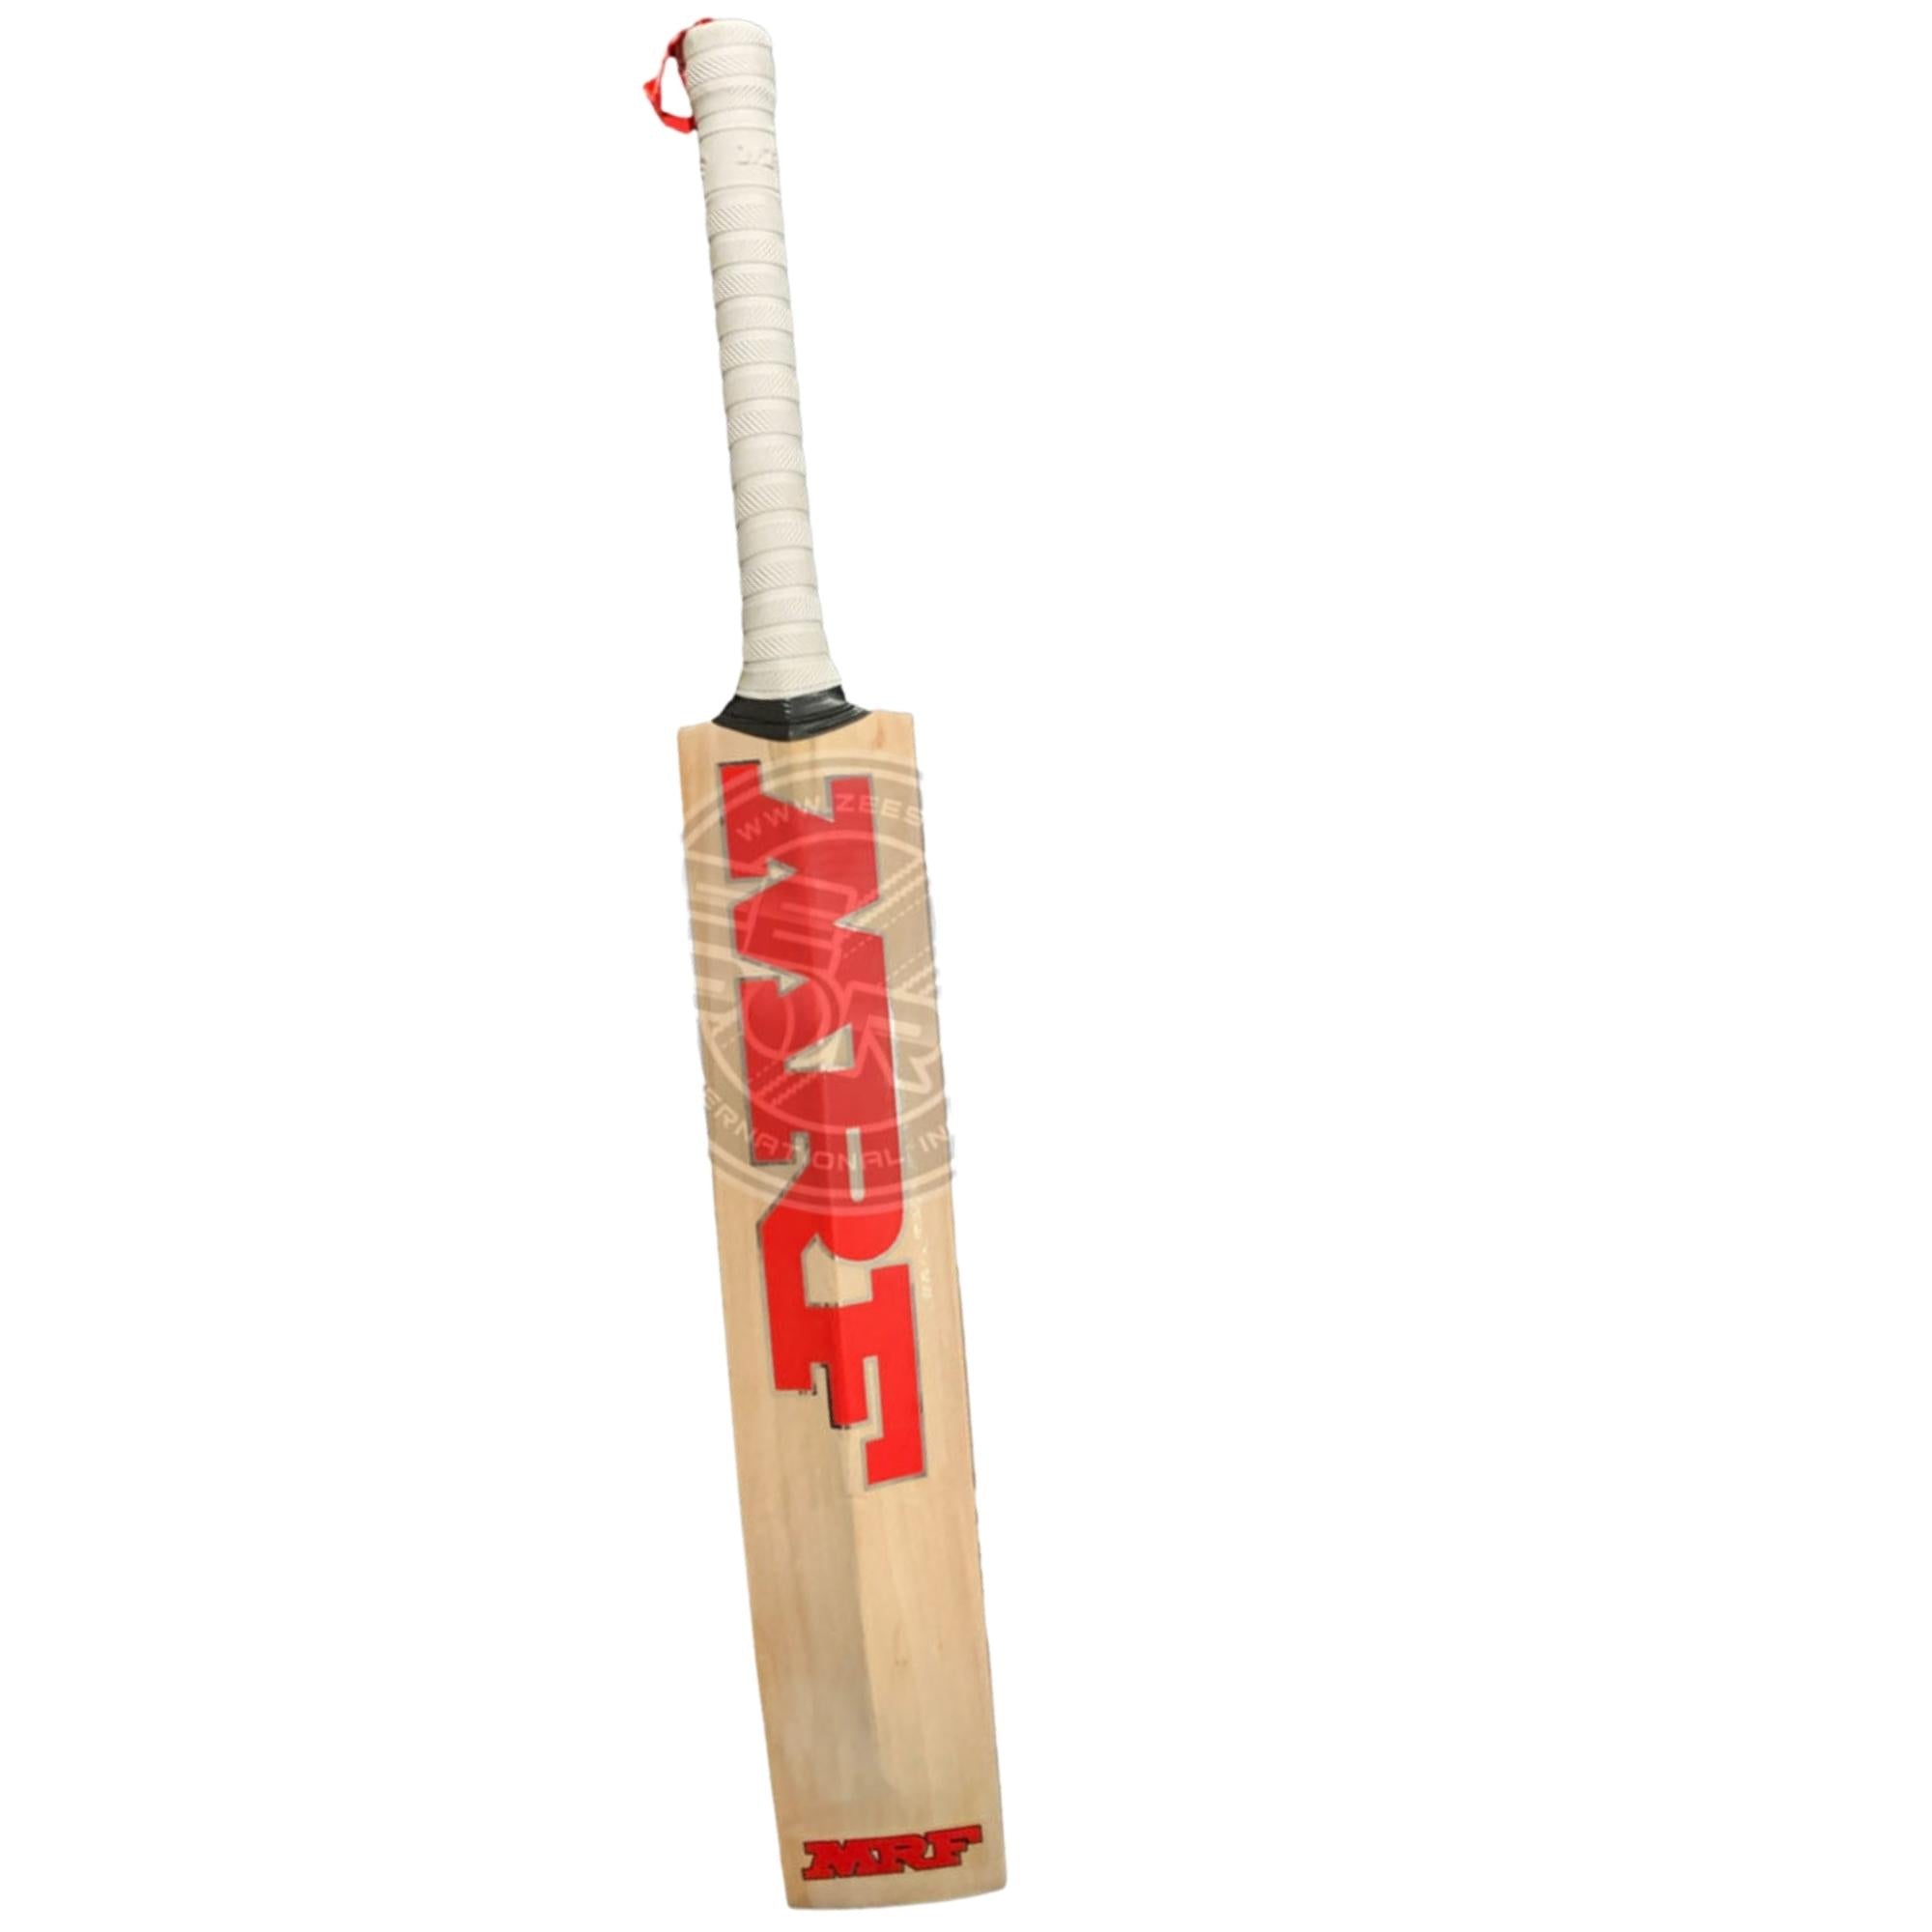 MRF Cricket Bat VK18 3.0 Virat Kohli Edition